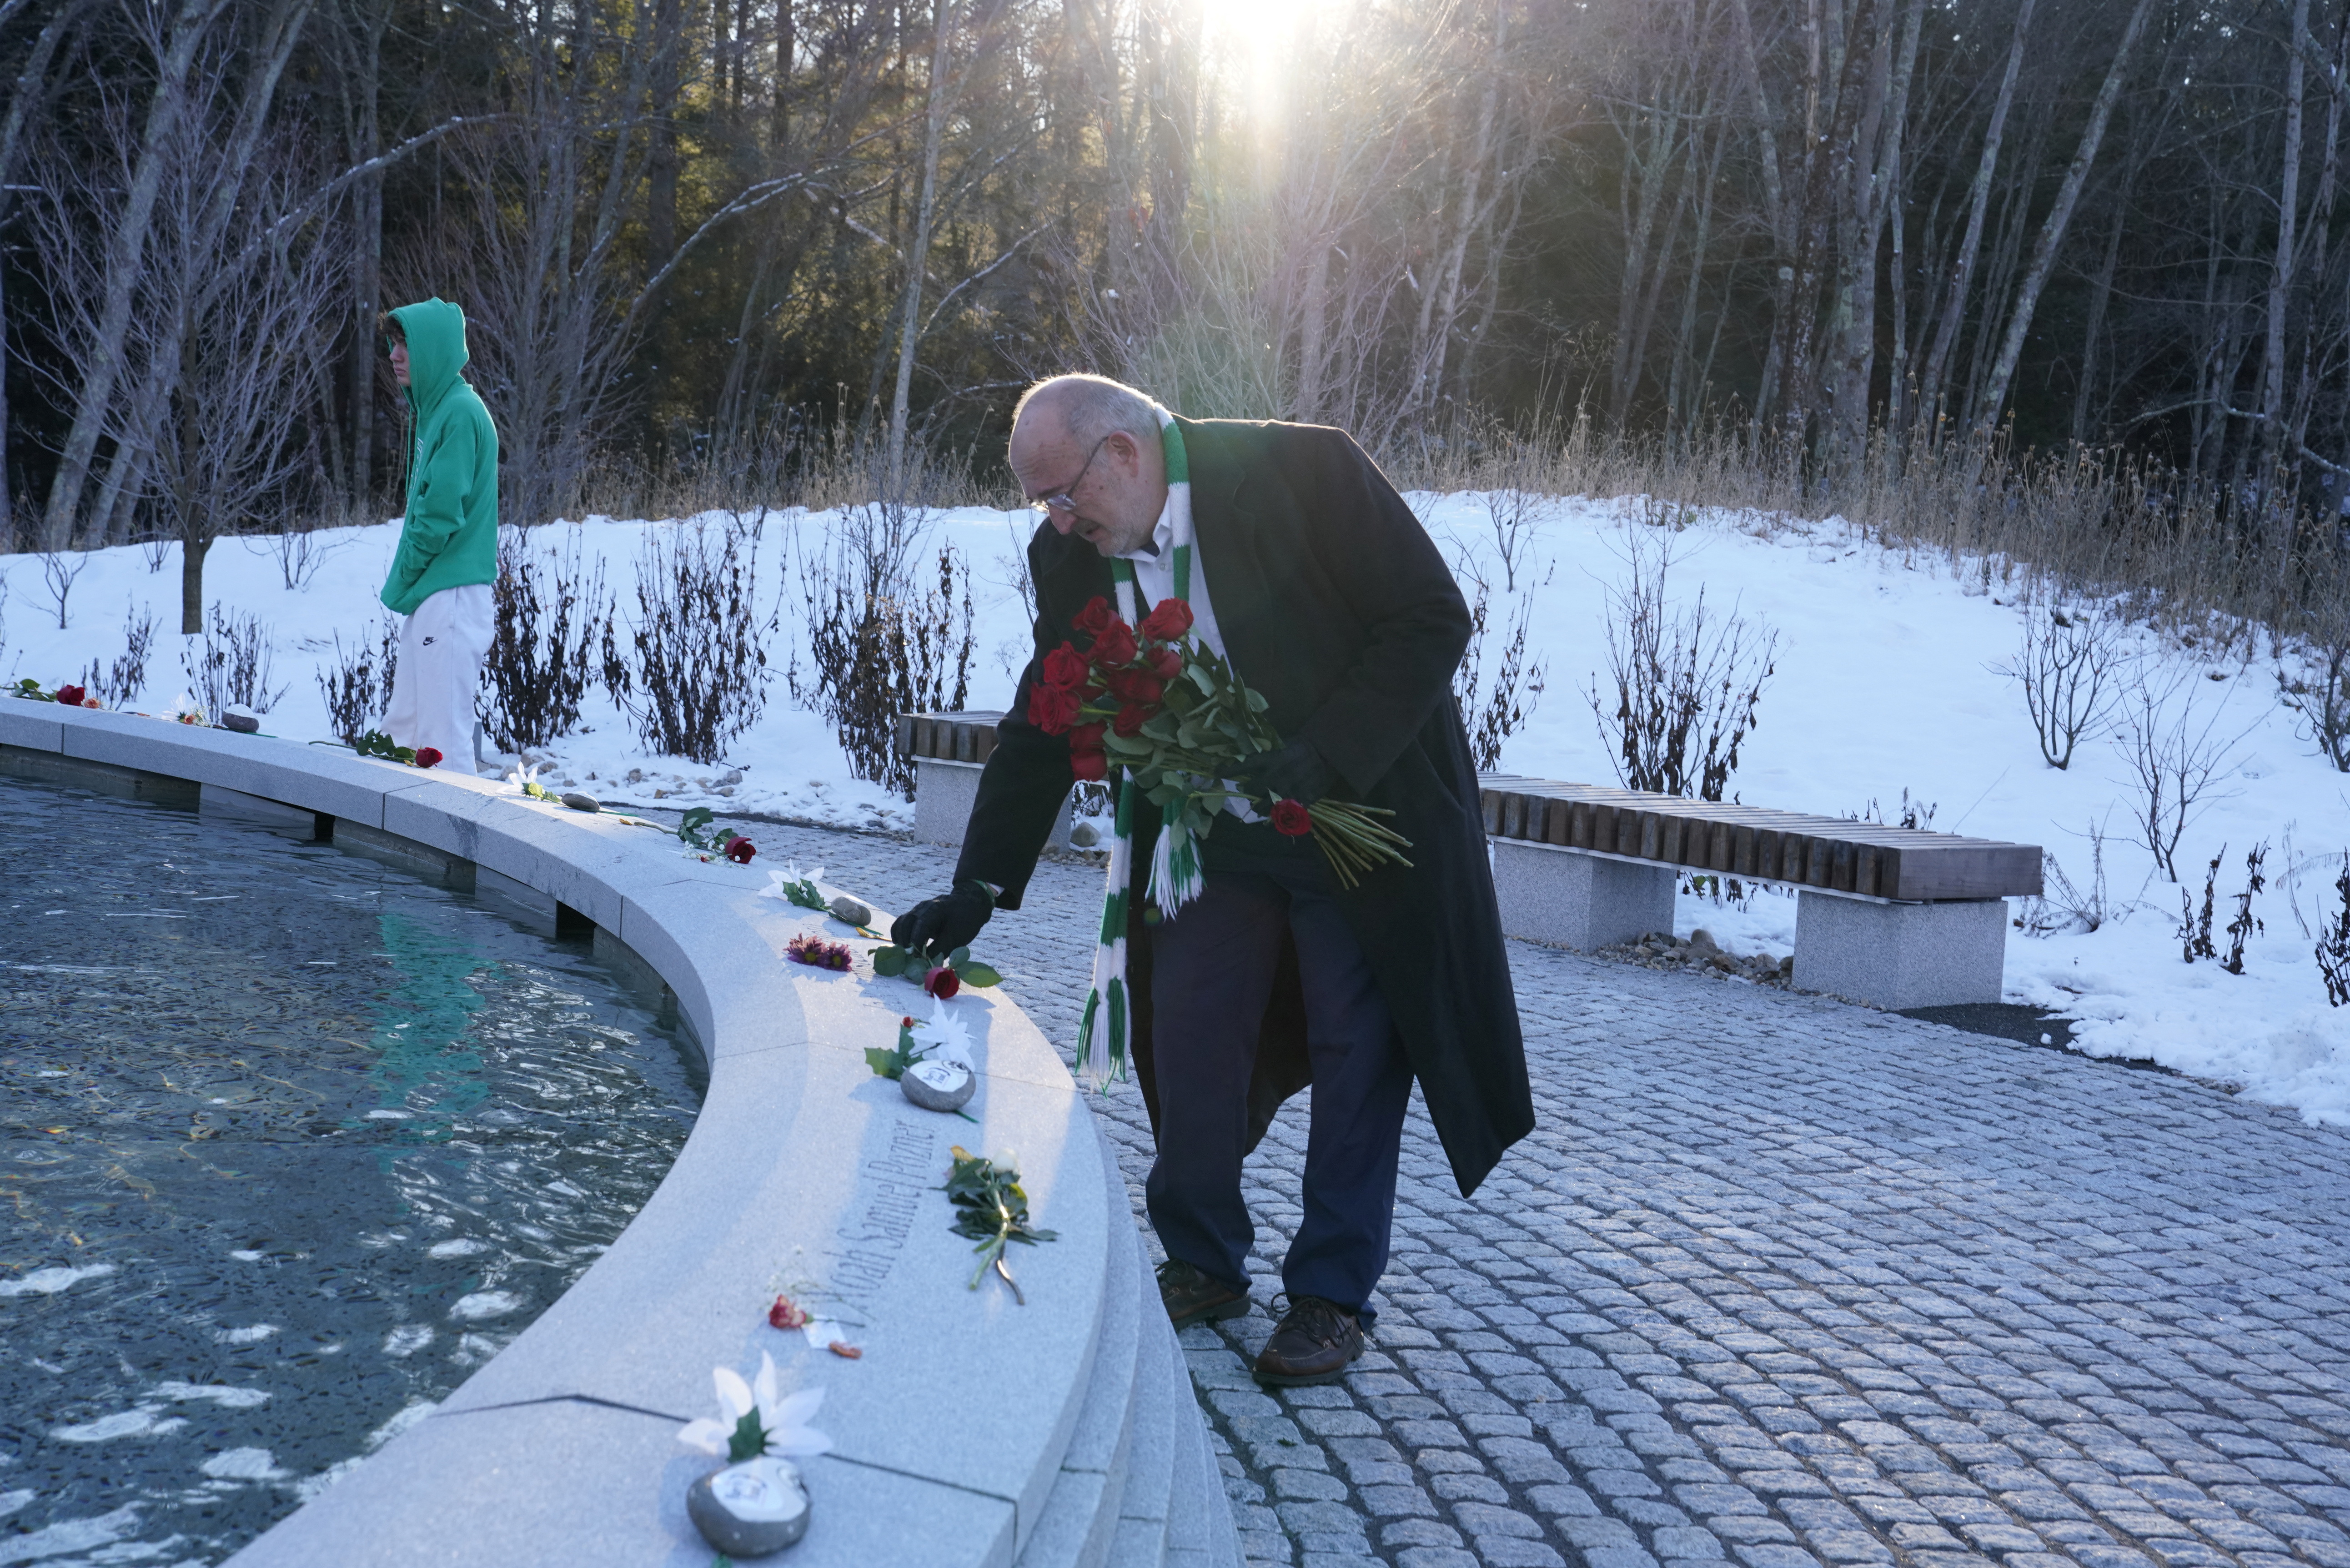 10th remembrance of Sandy Hook school massacre